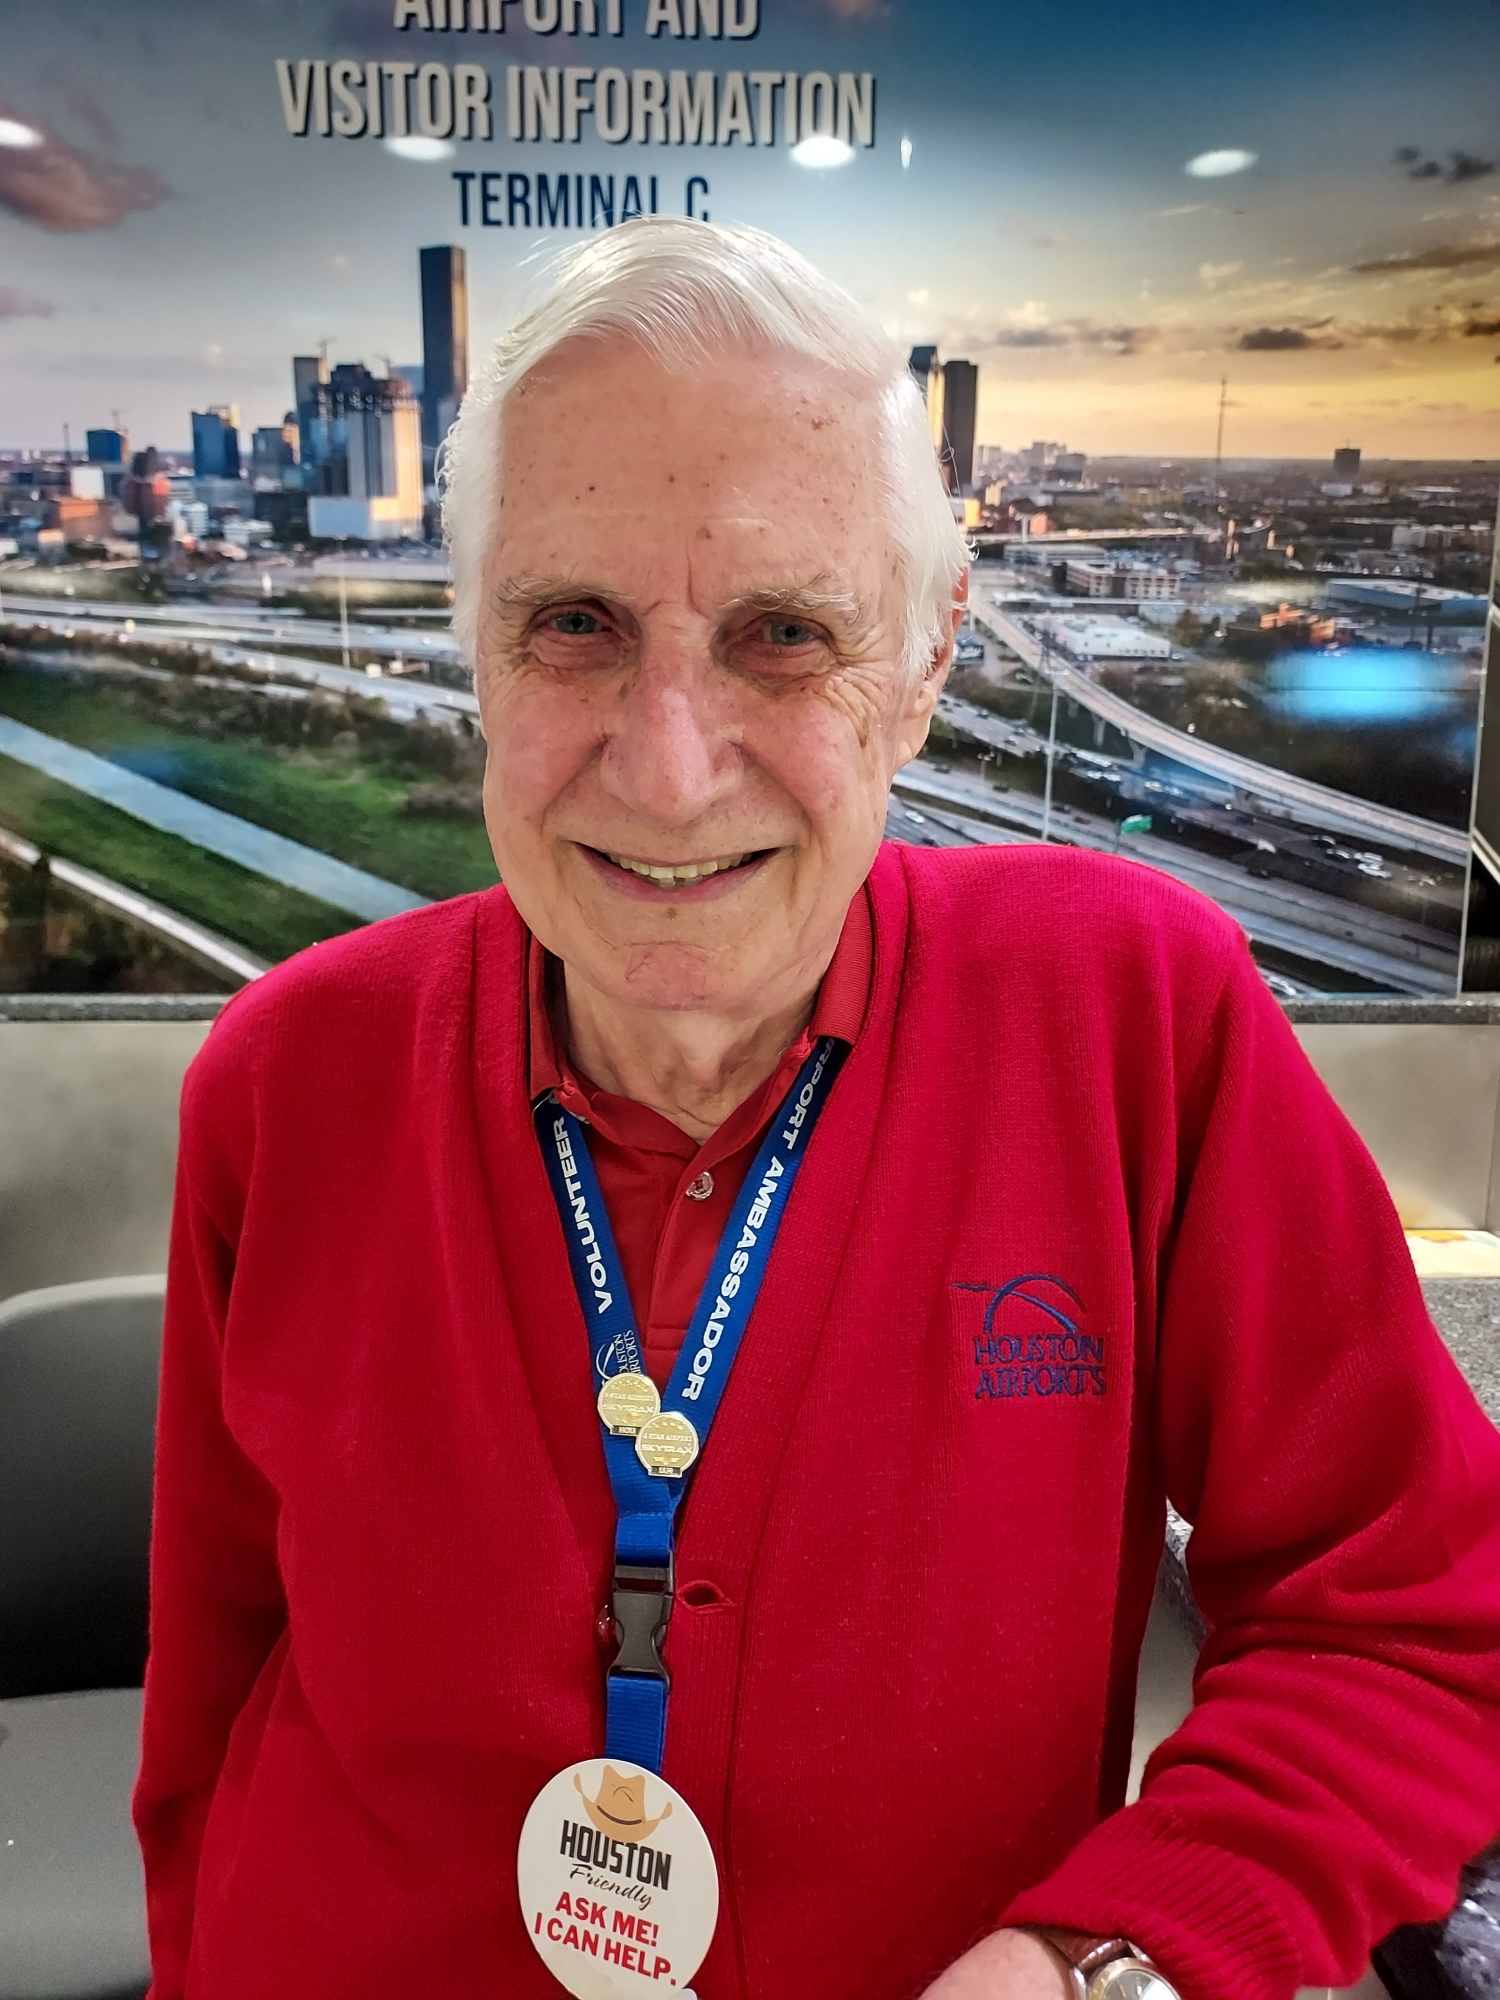 Paul Barker volunteers at Houston Airports 